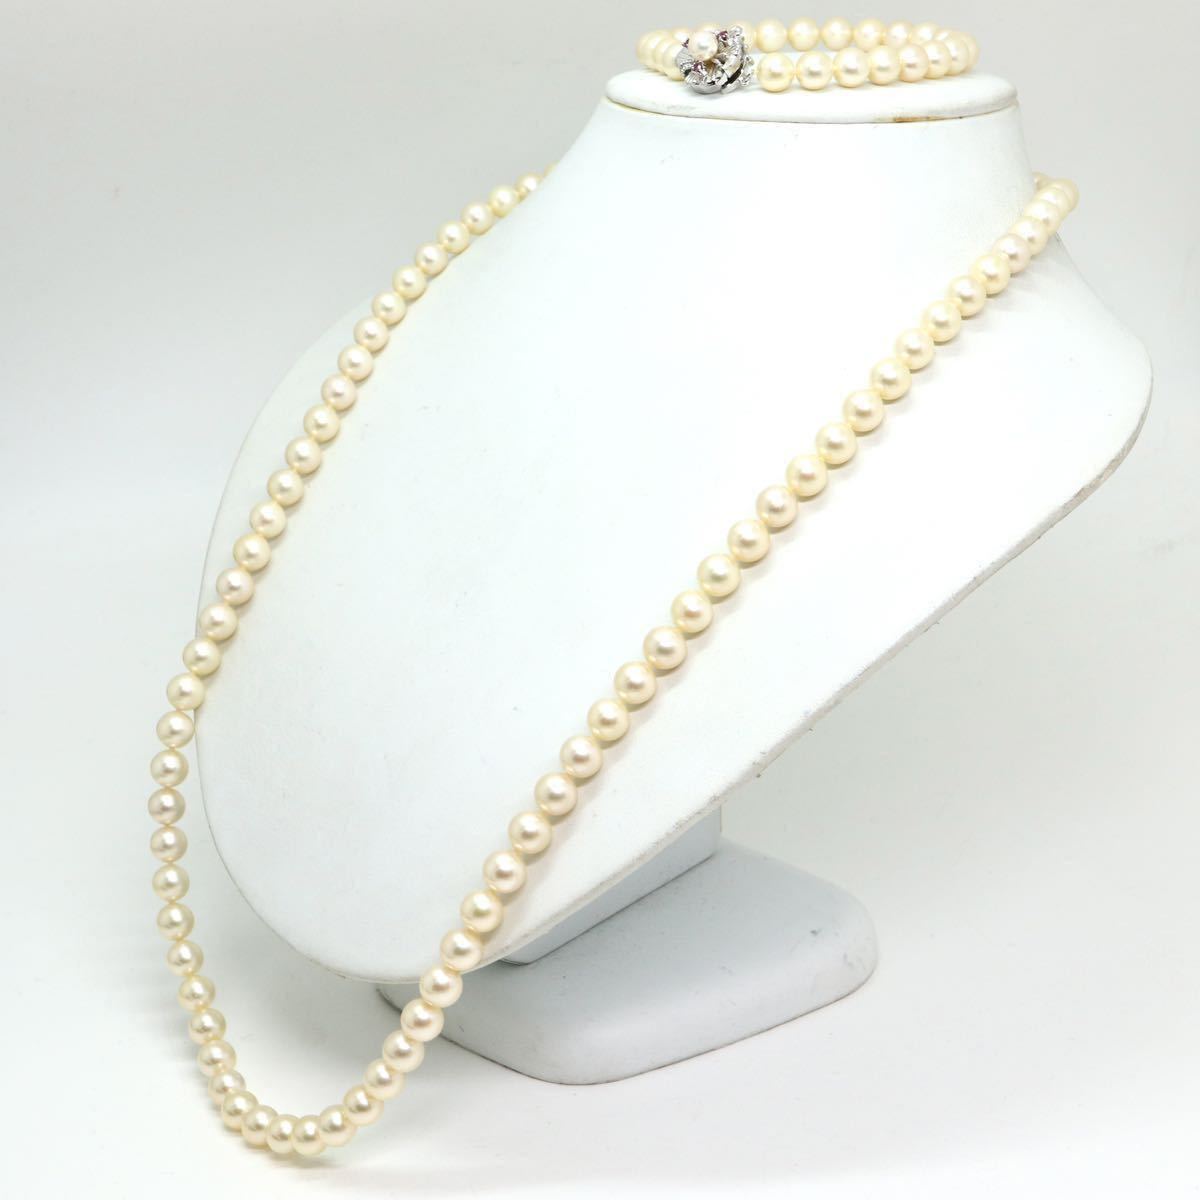 《K14WG天然ルビー付きアコヤ本真珠ネックレス&ブレスレット》D 7.5-8.0mm珠 75.0g 68cm 20cm pearl necklace ジュエリー jewelry EC5/FA0_画像3